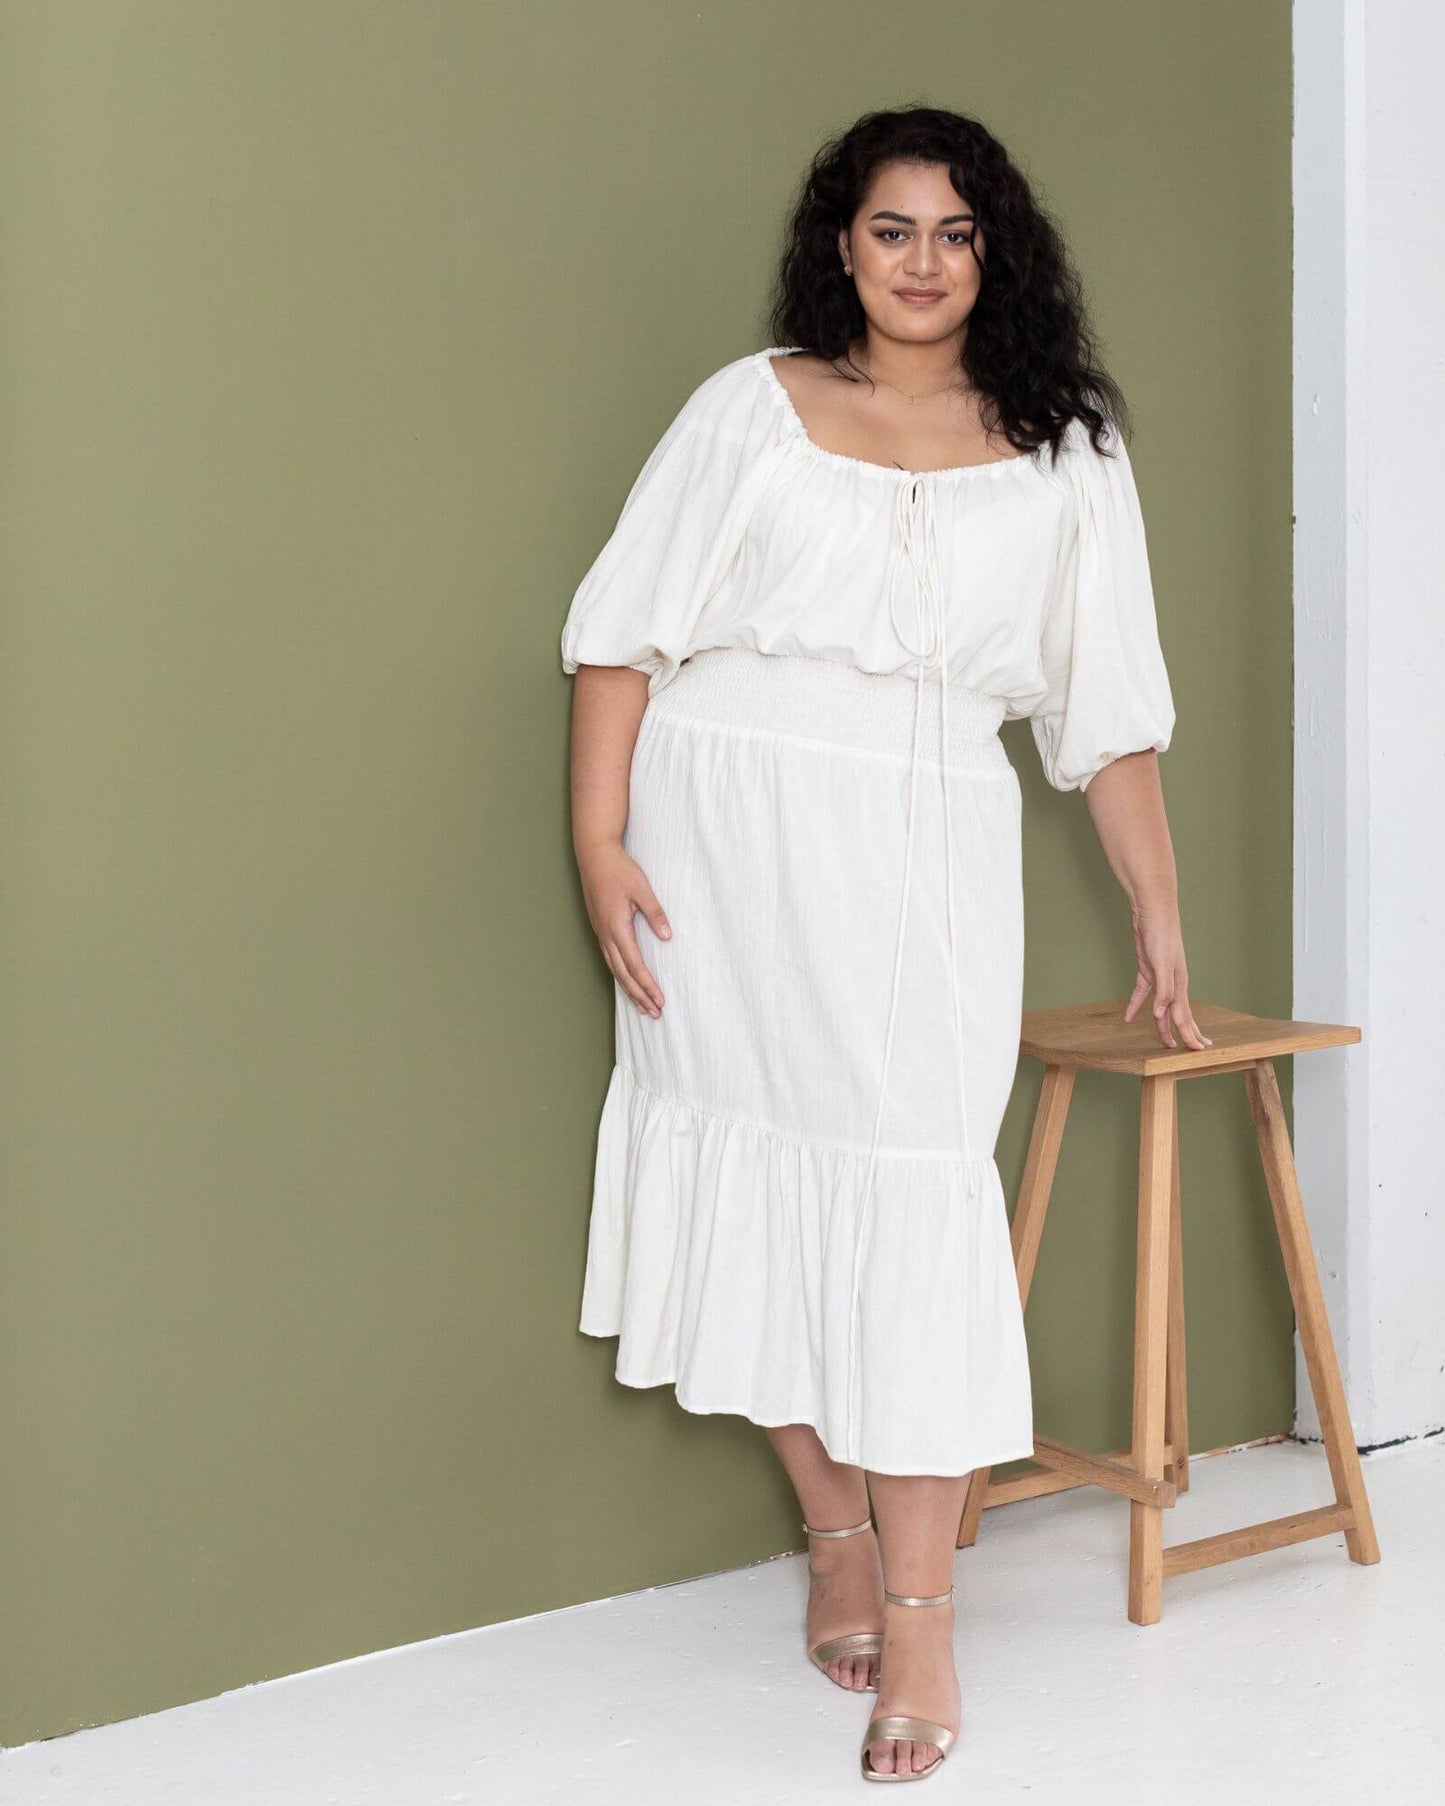 Diana Prairie Midi Dress in Off White